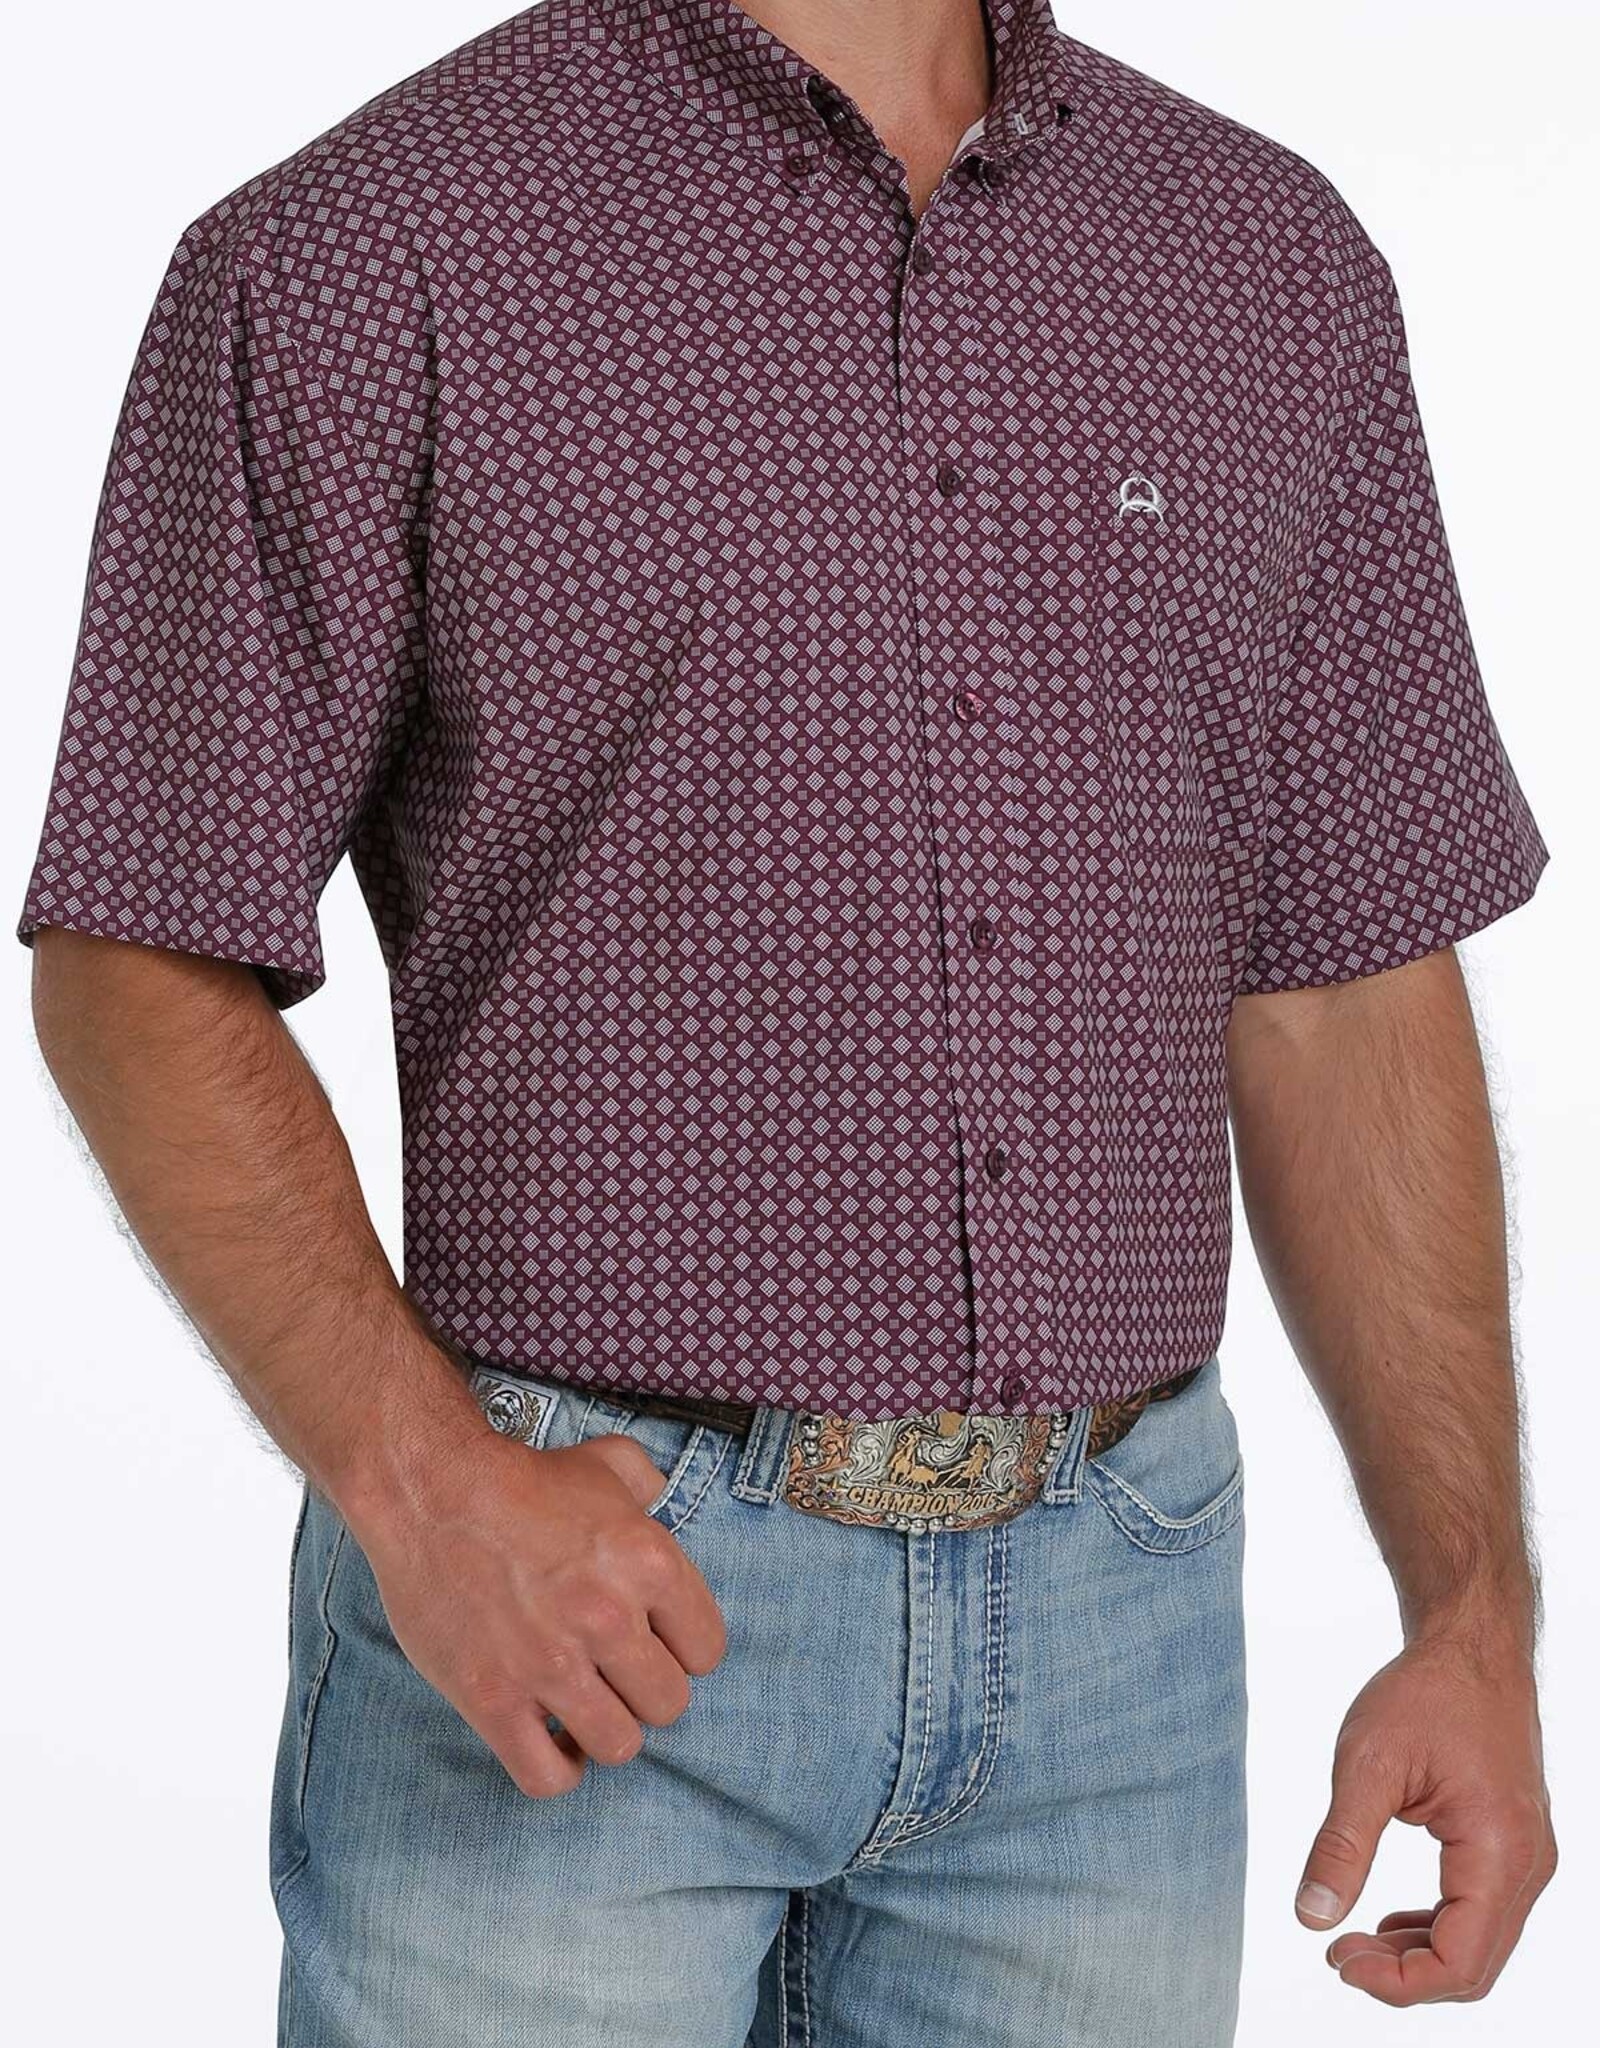 Cinch Mens Cinch Short Sleeve Purple Print Arena Flex Western Button Shirt